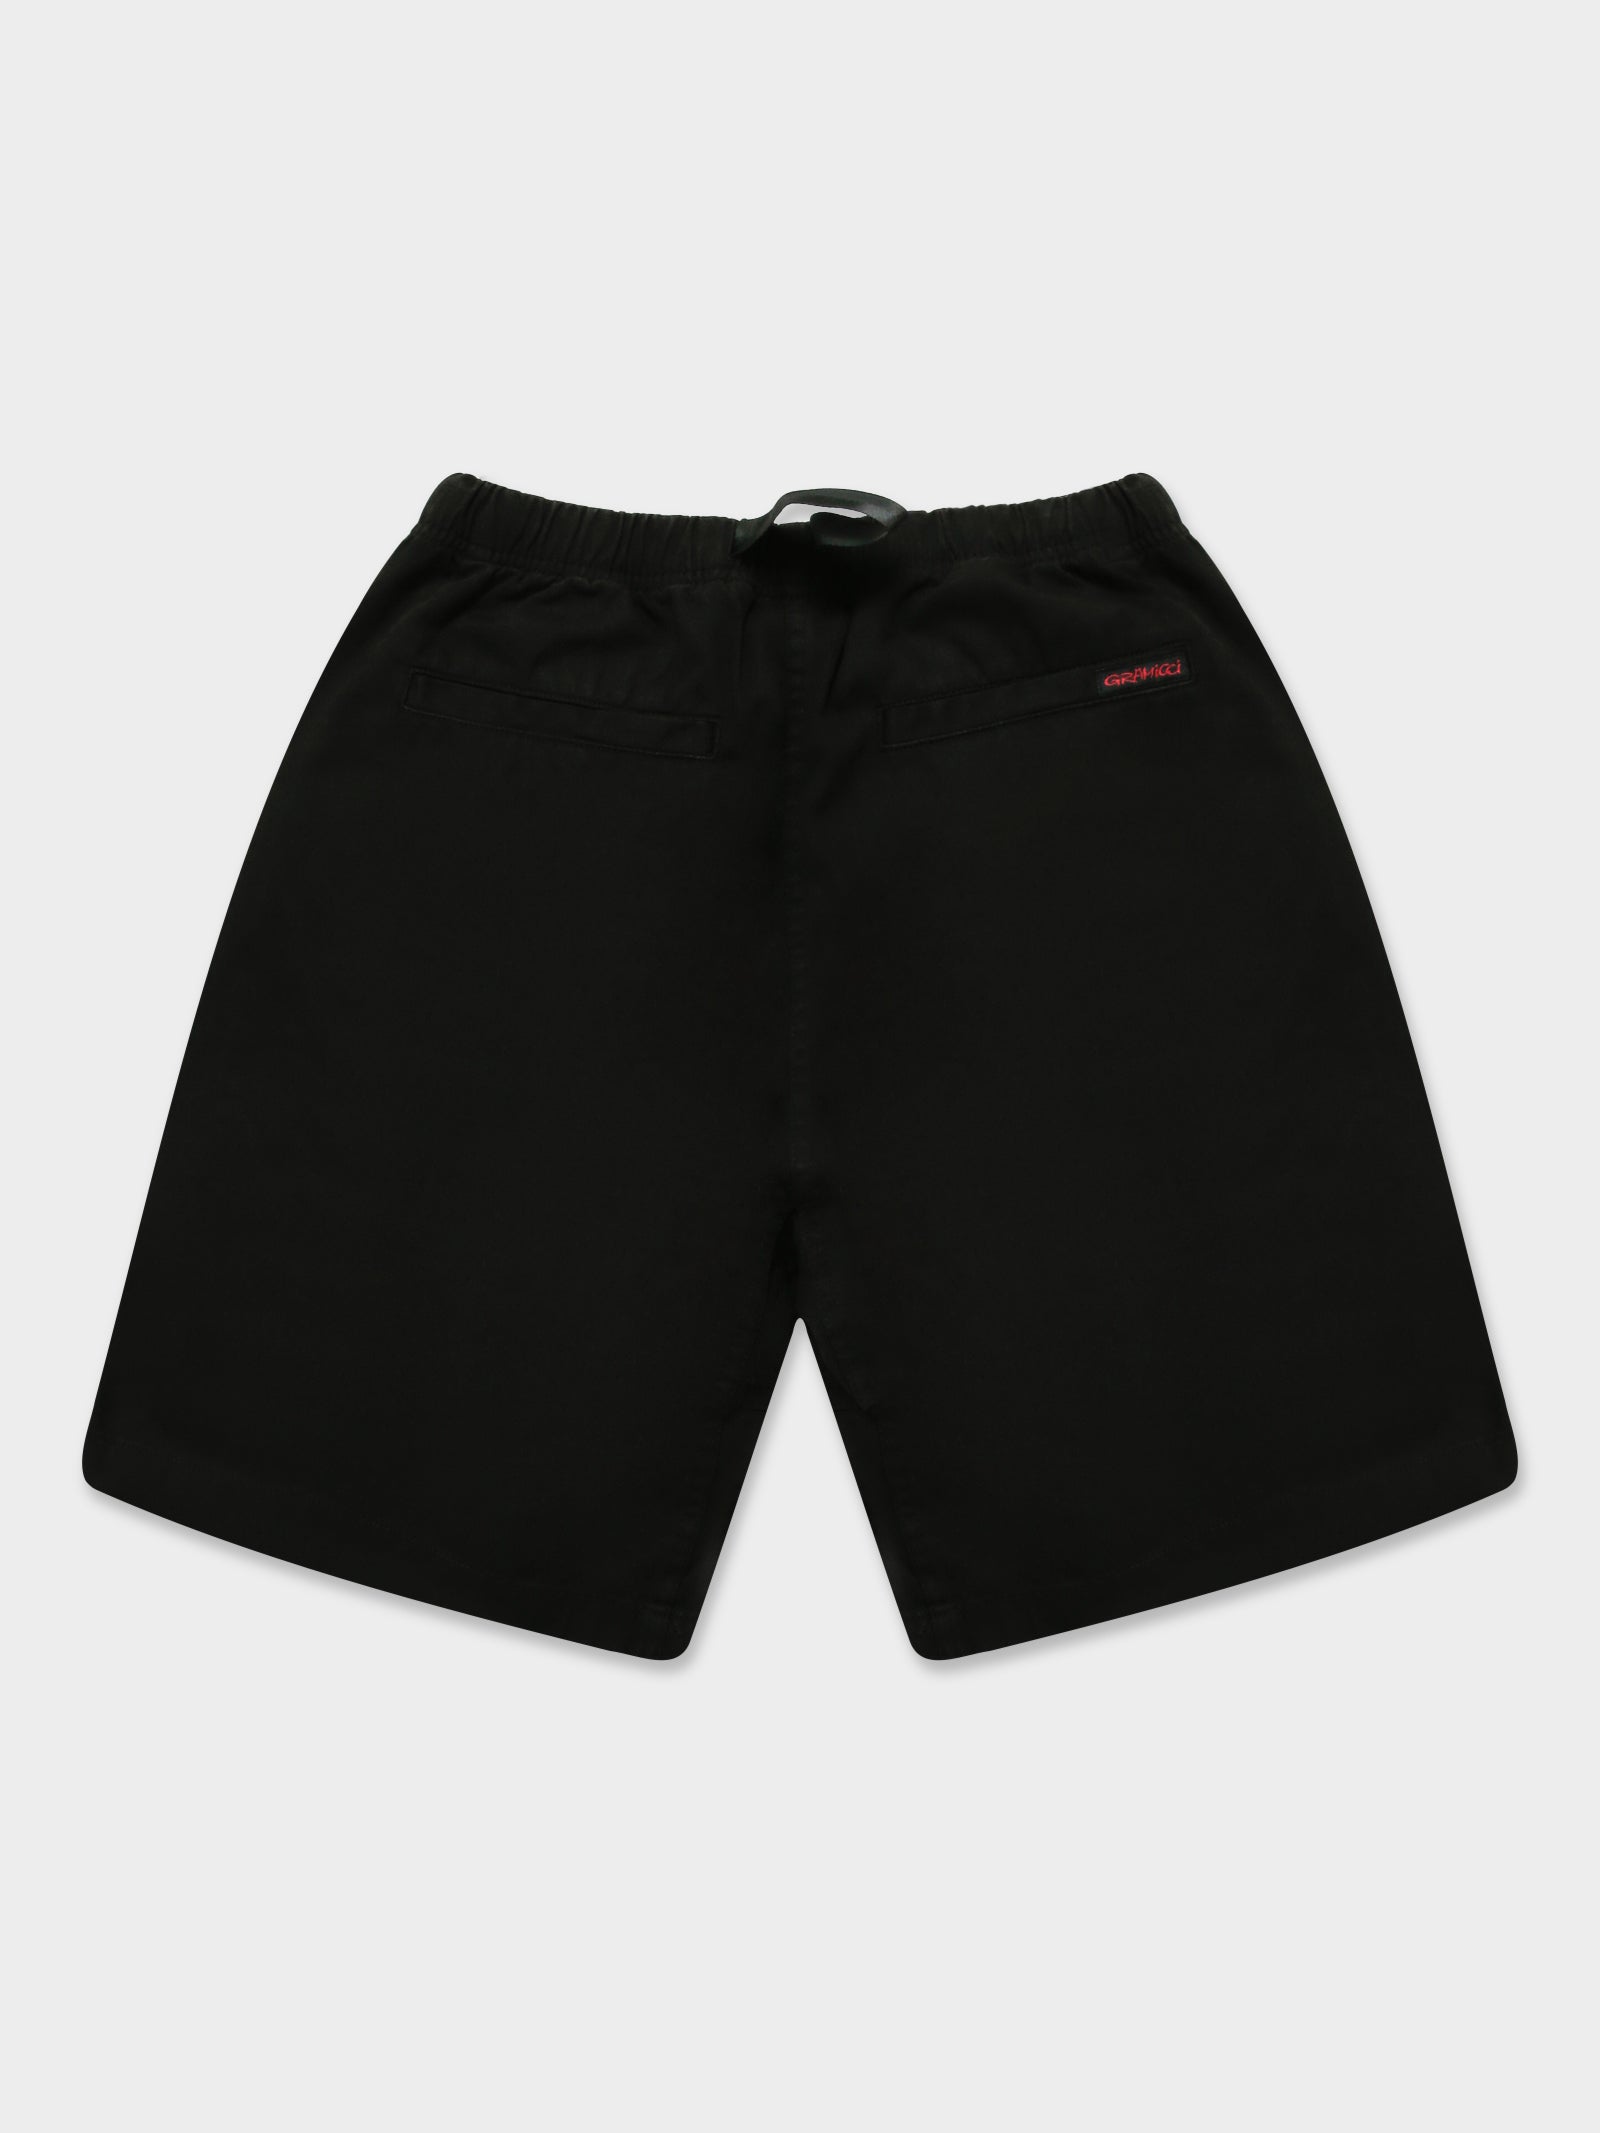 G Shorts in Black